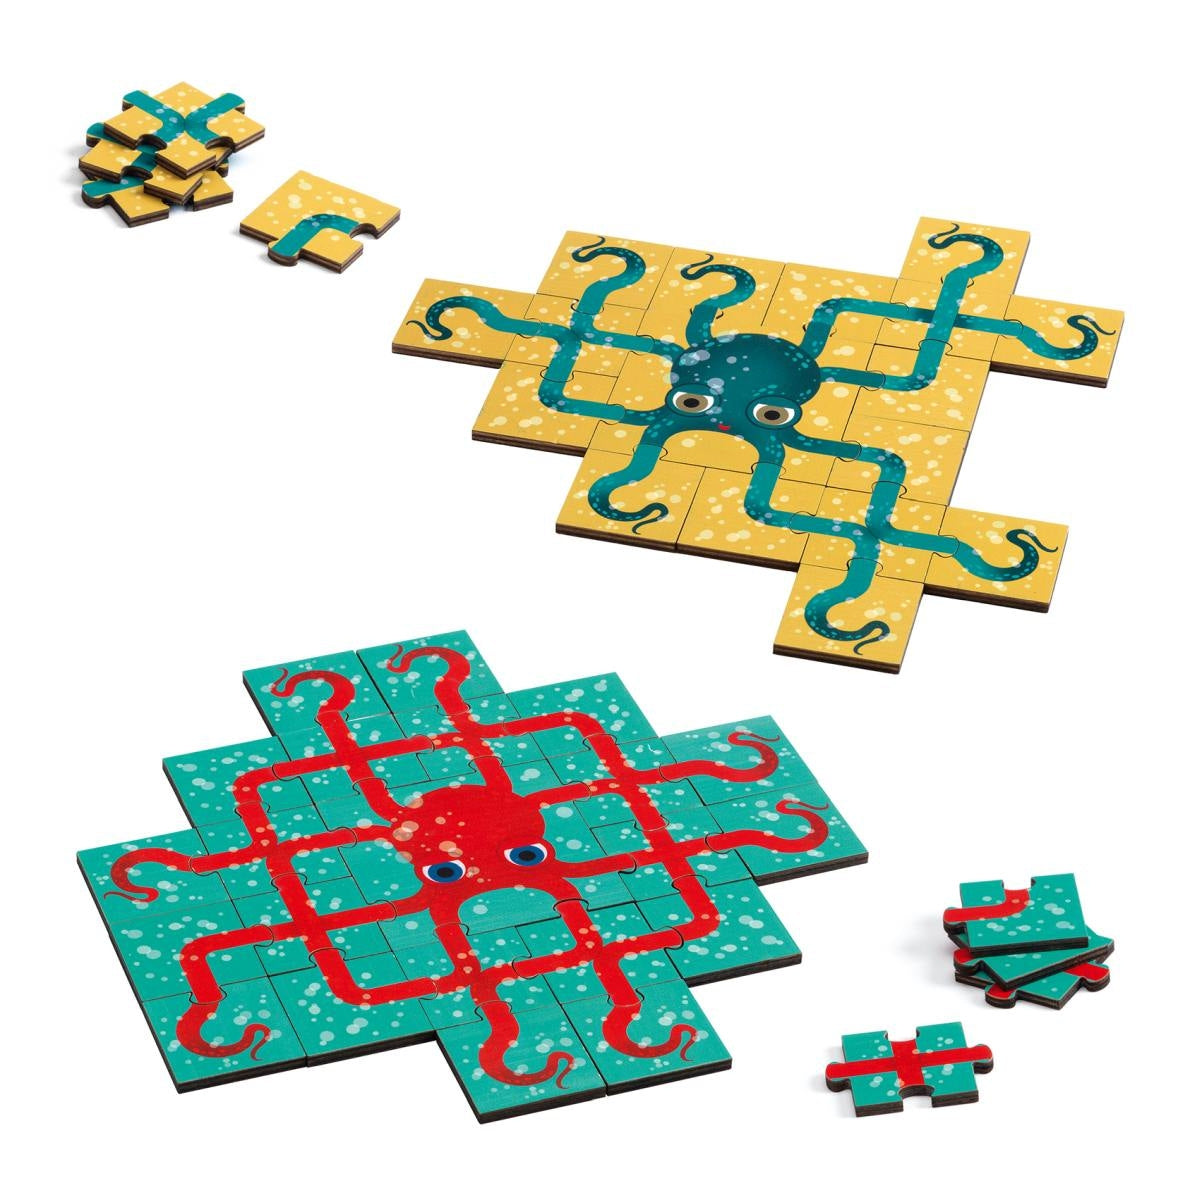 Knobelspiele: Guzzle